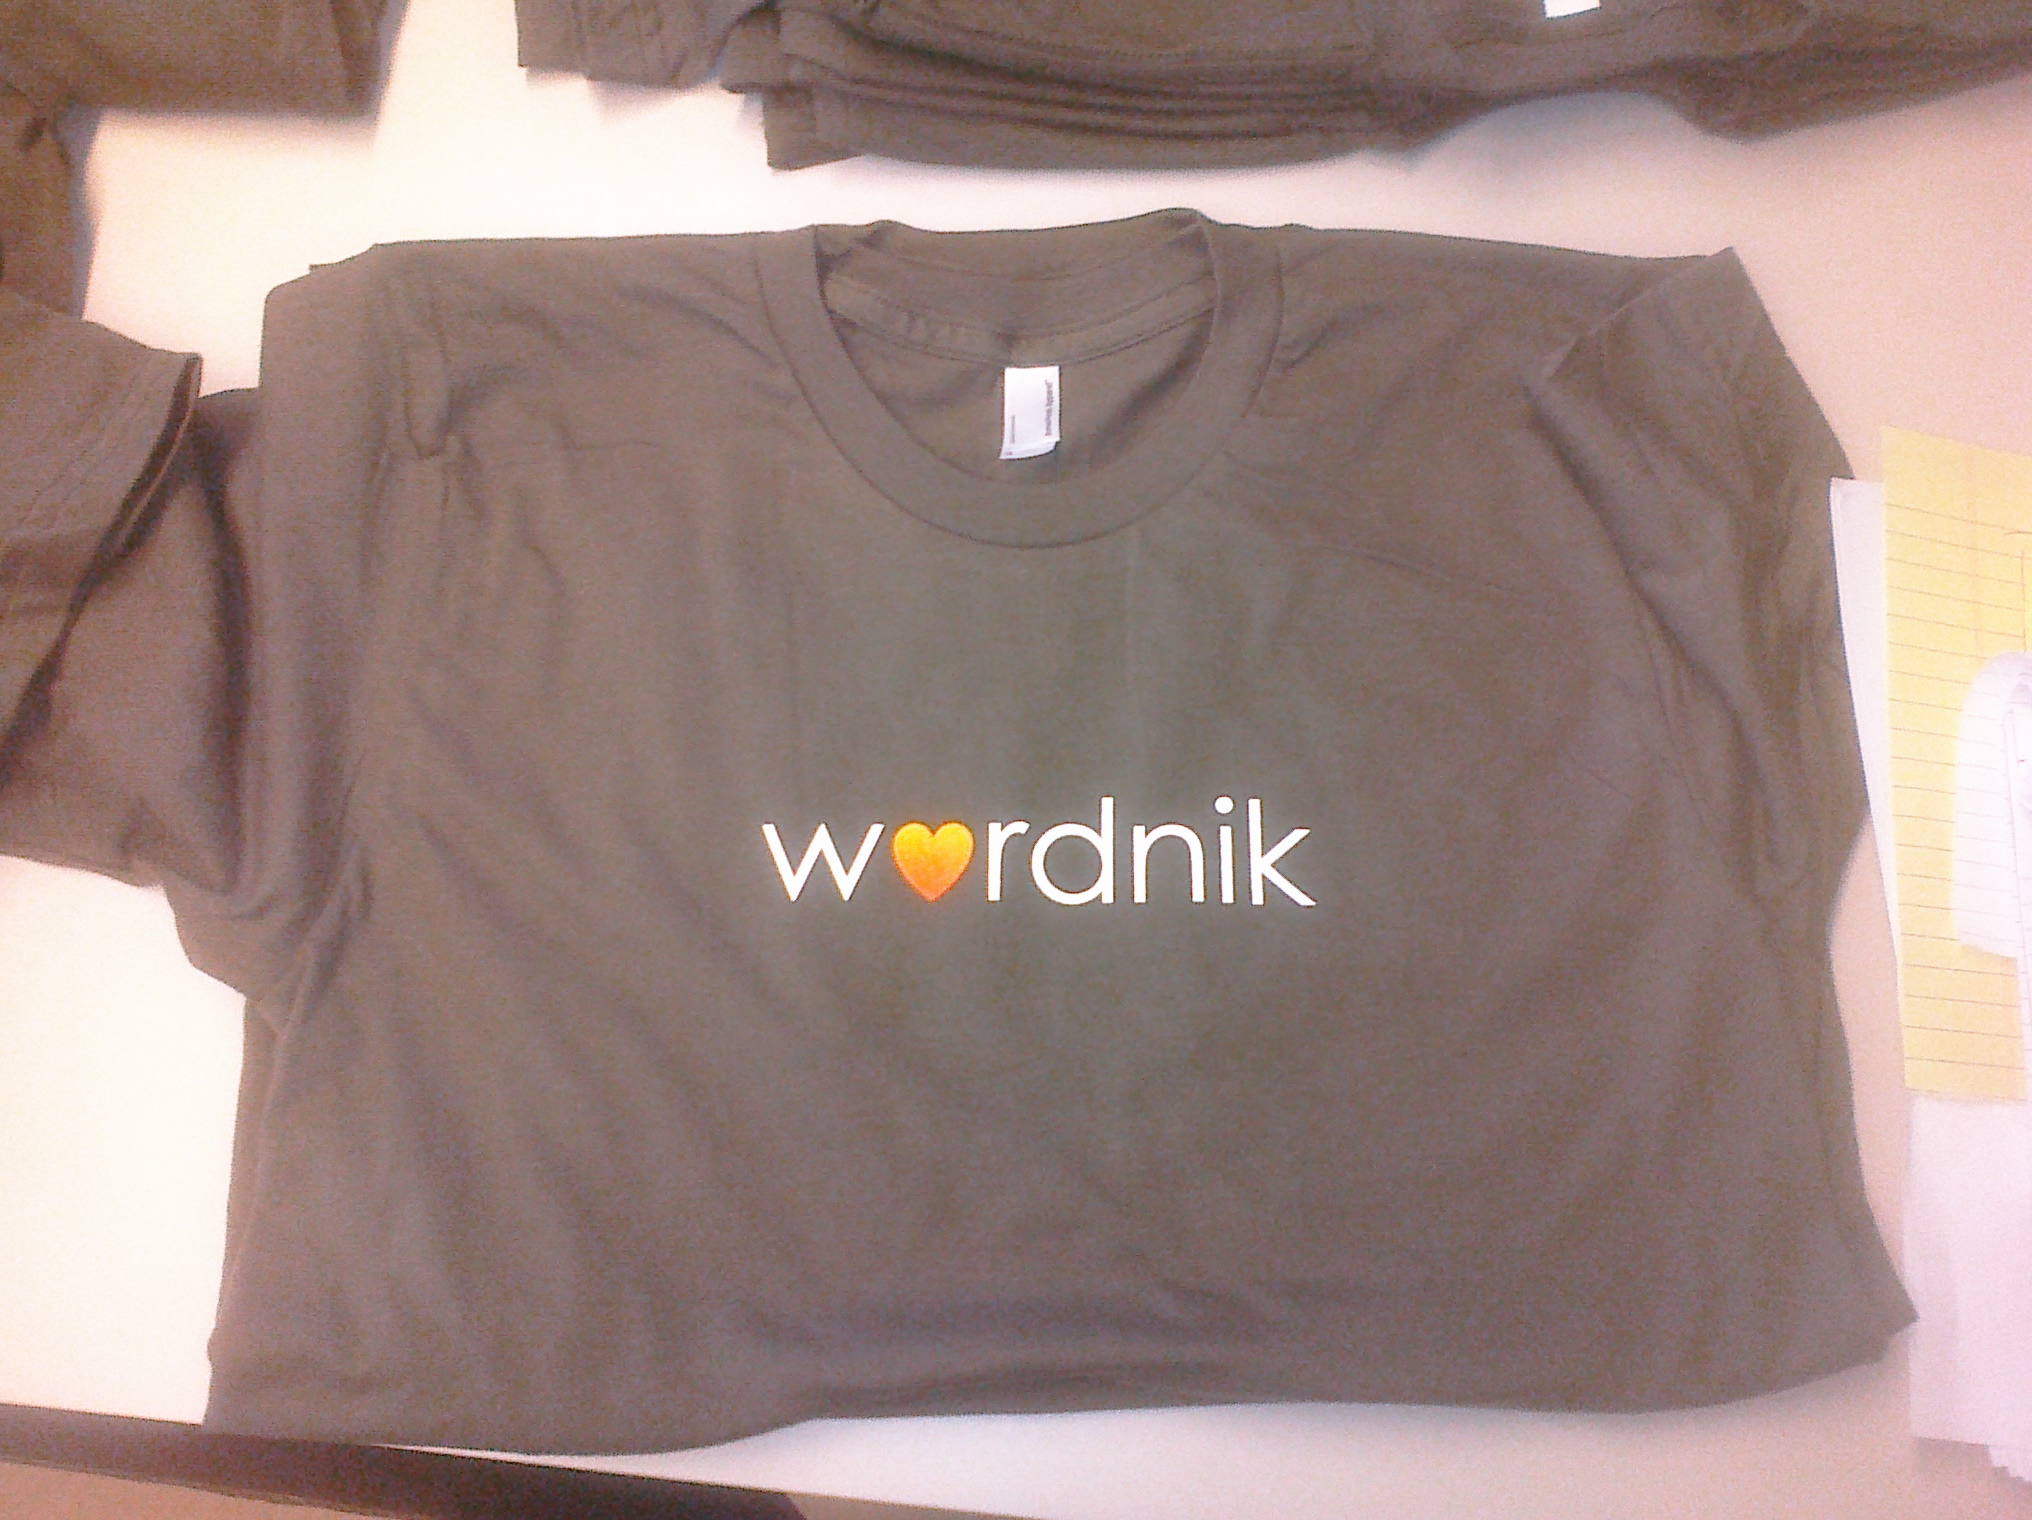 Wordnik t-shirt